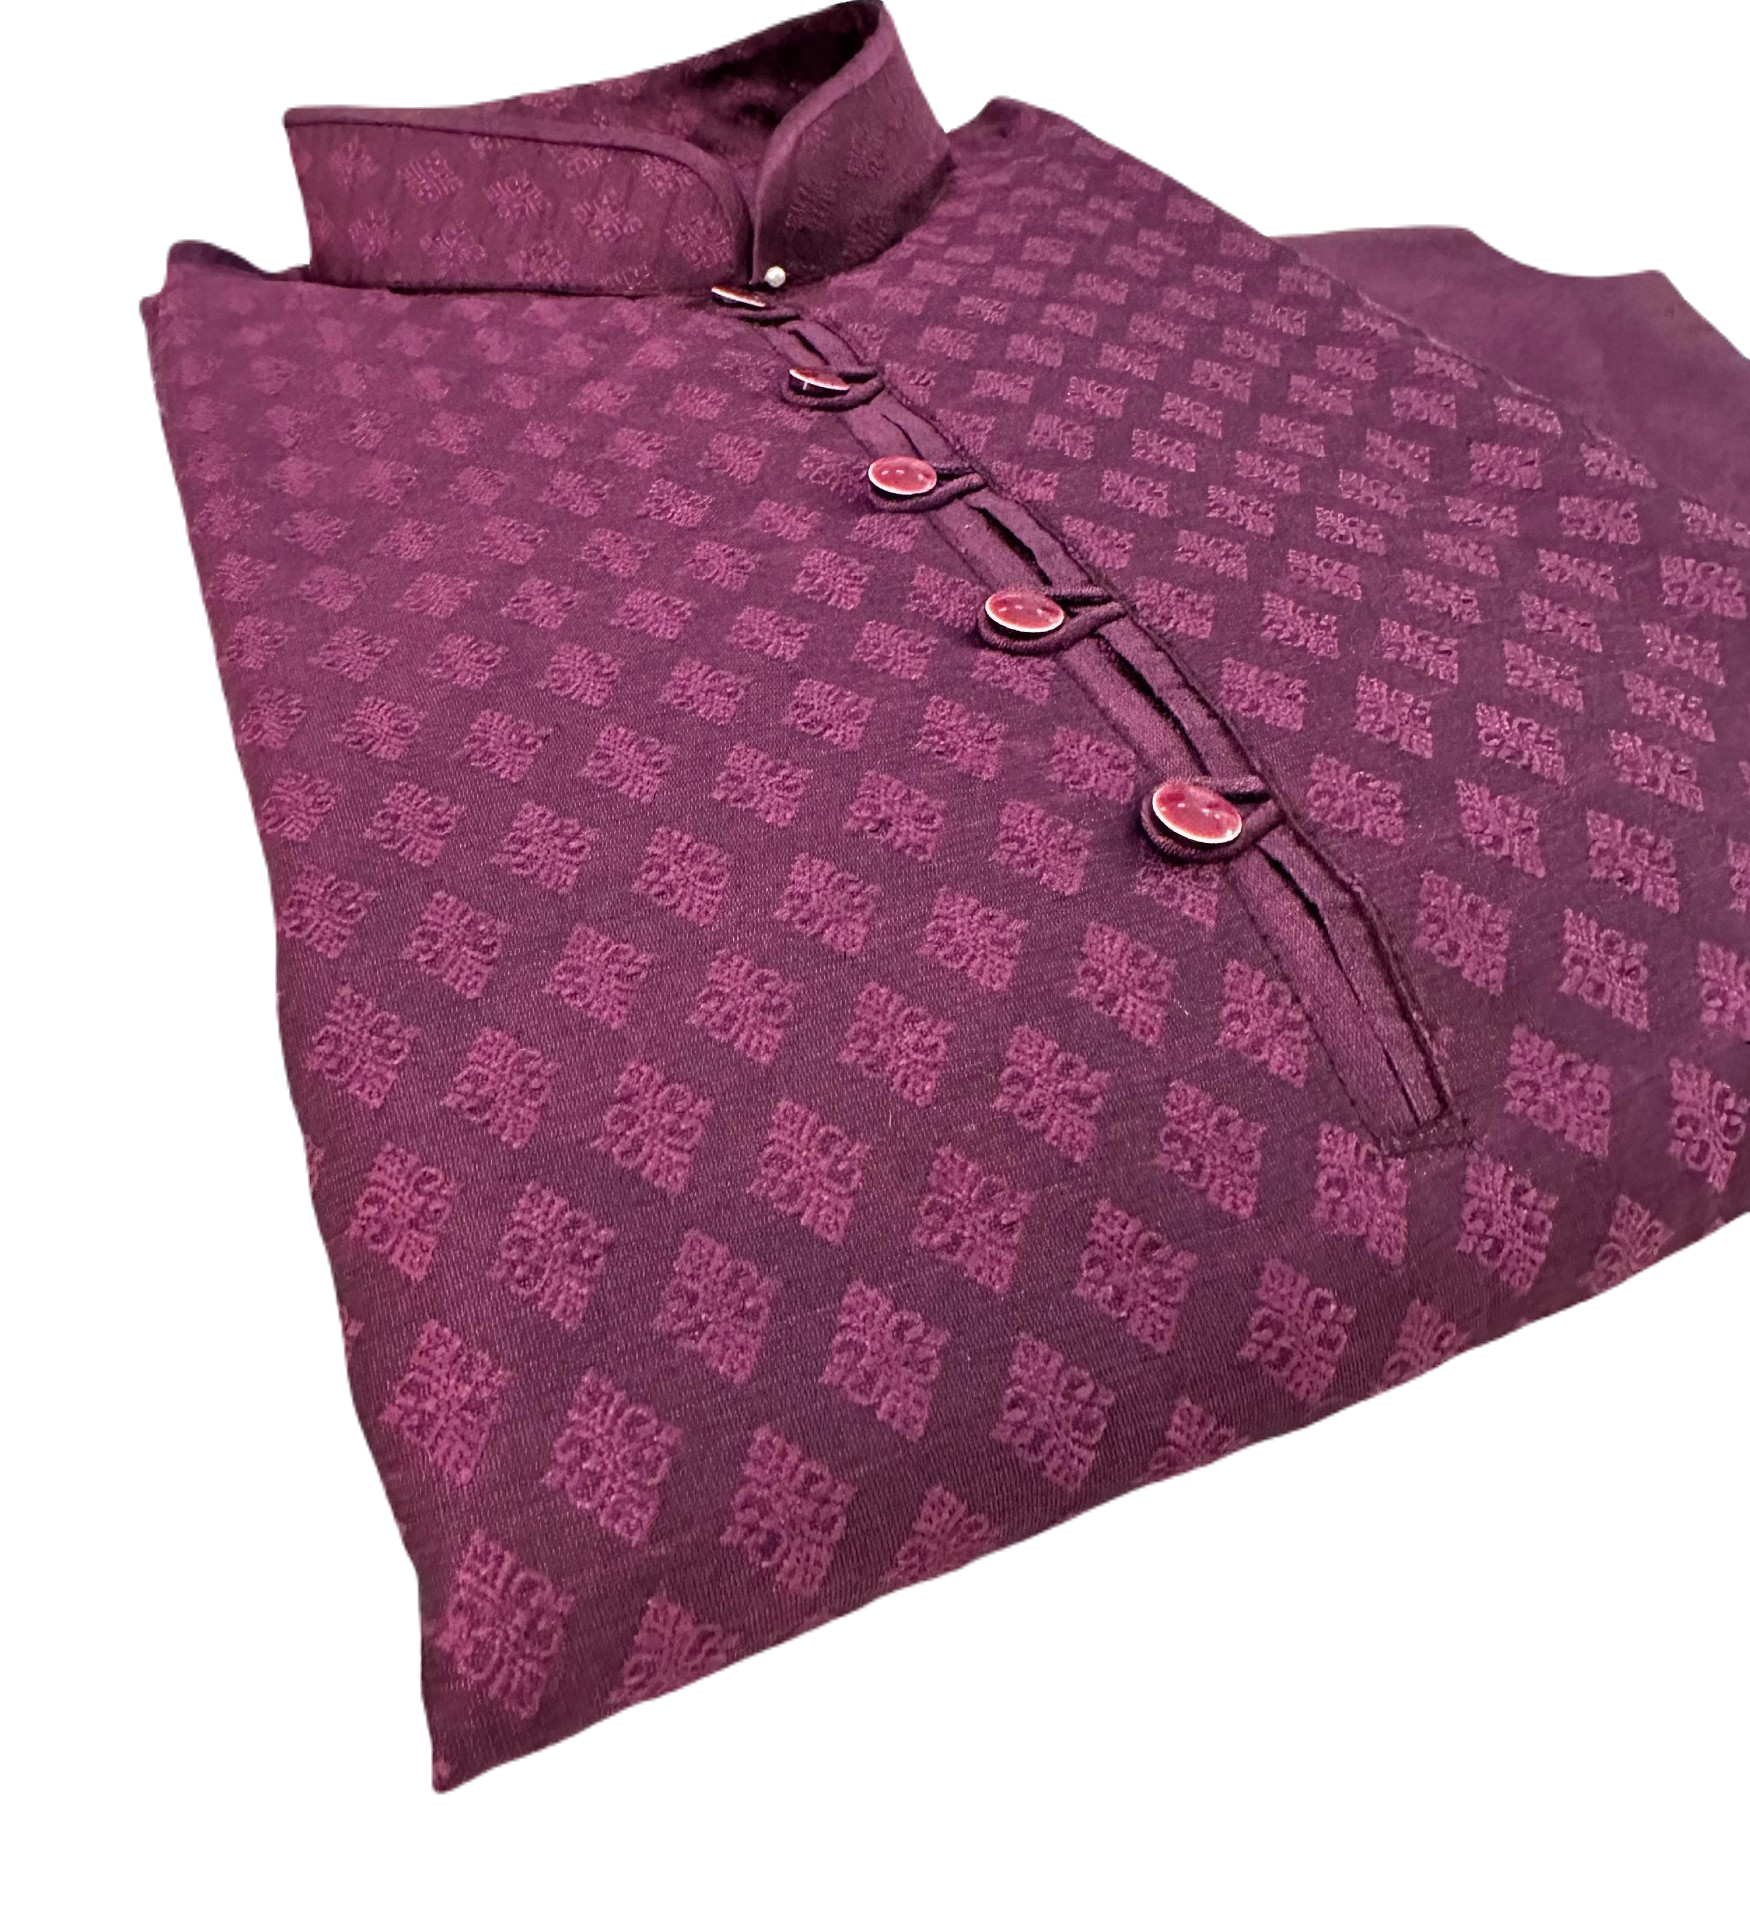 Man's Sangria Violet Shade Jacquard Silk 2 Piece Kurta Pajama Set, Father & Son's Outfit, DM -1061